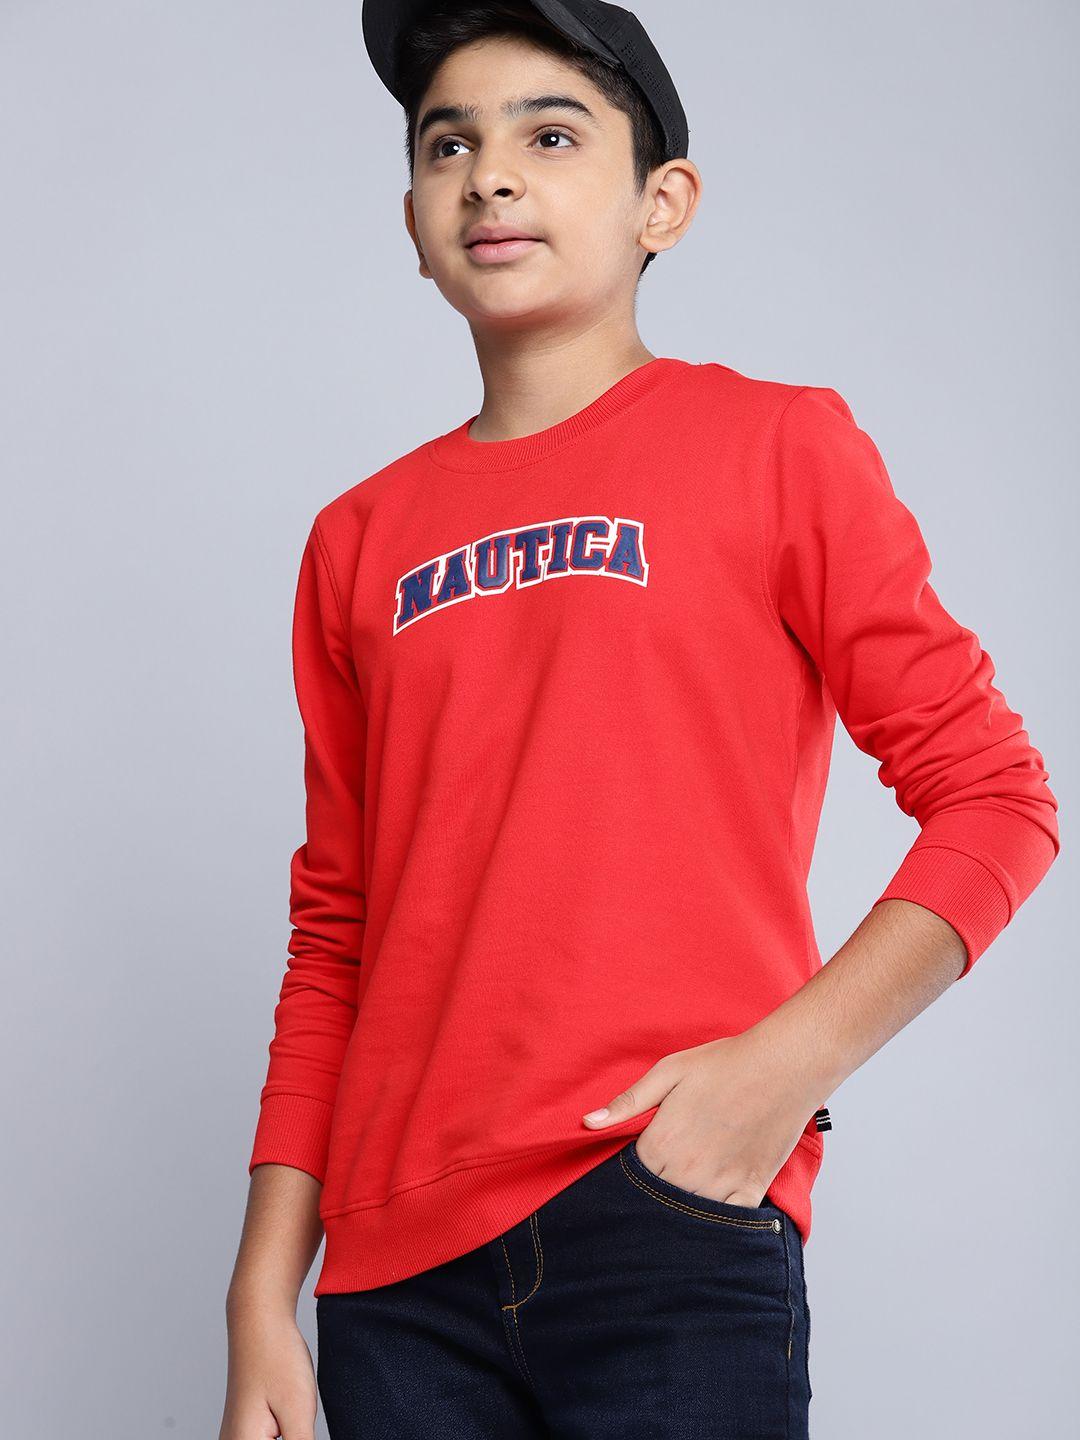 nautica boys red & navy blue pure cotton brand logo printed sweatshirt